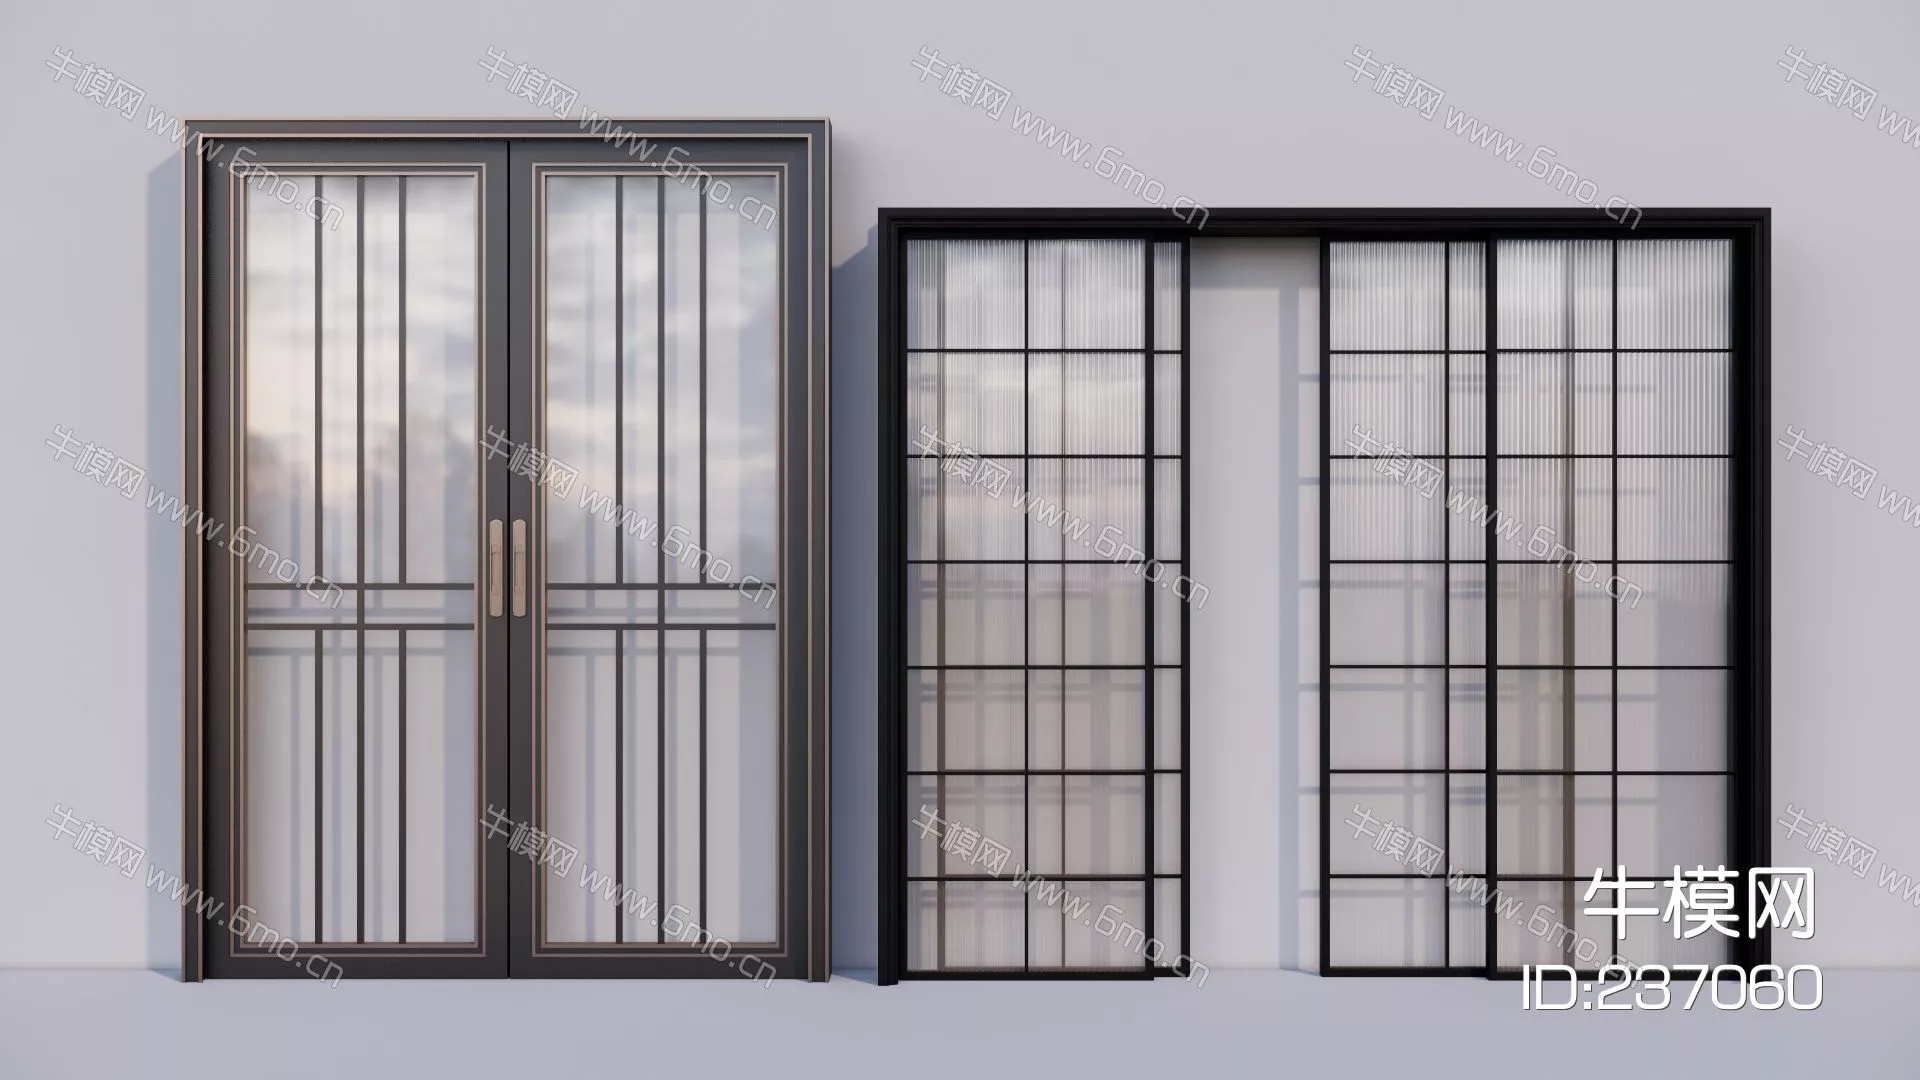 MODERN DOOR AND WINDOWS - SKETCHUP 3D MODEL - ENSCAPE - 237060